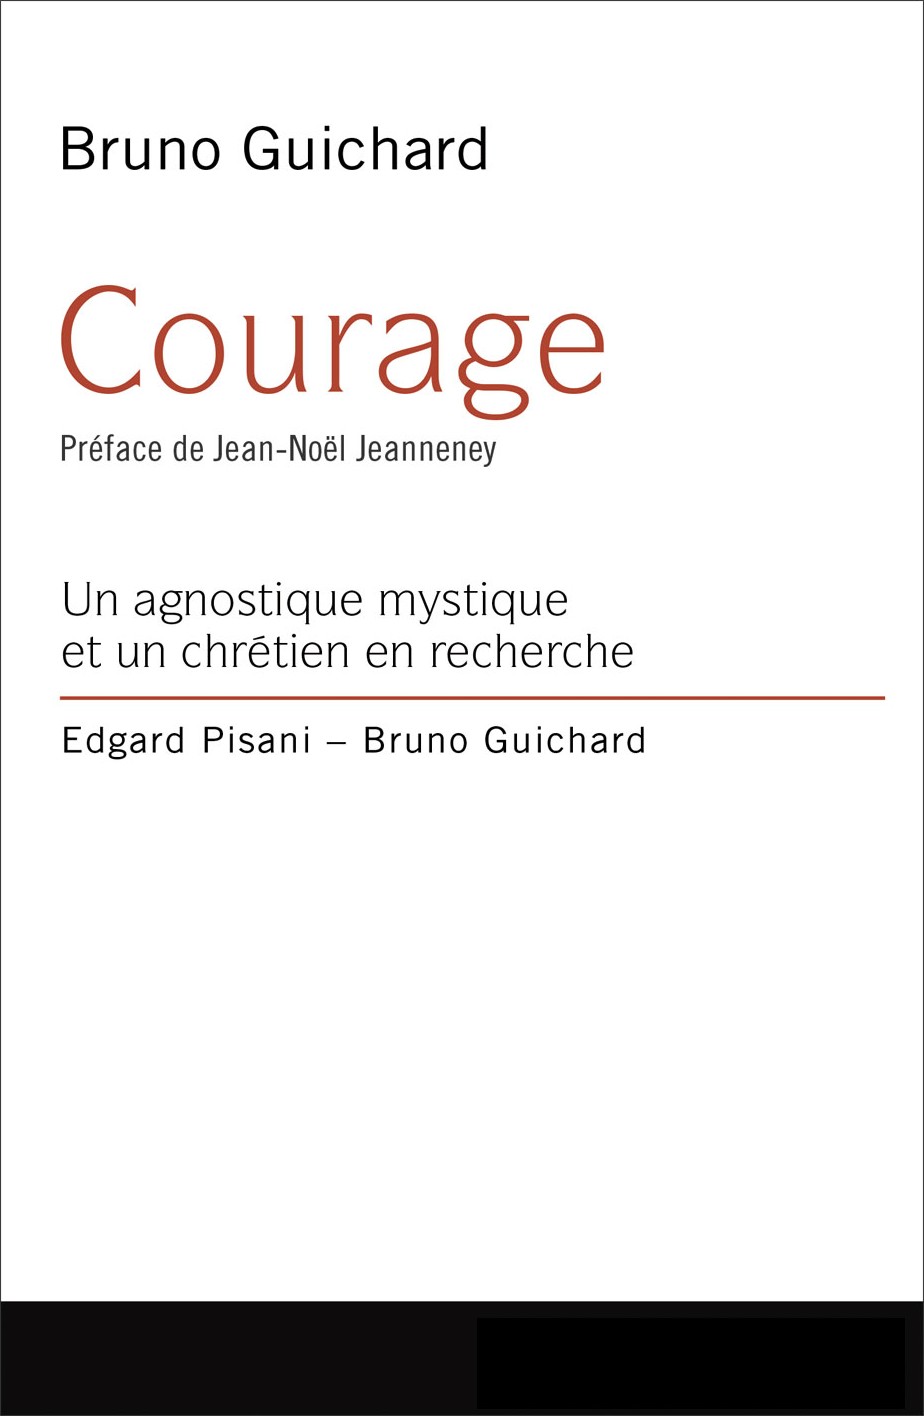 Bruno Guichard, Courage